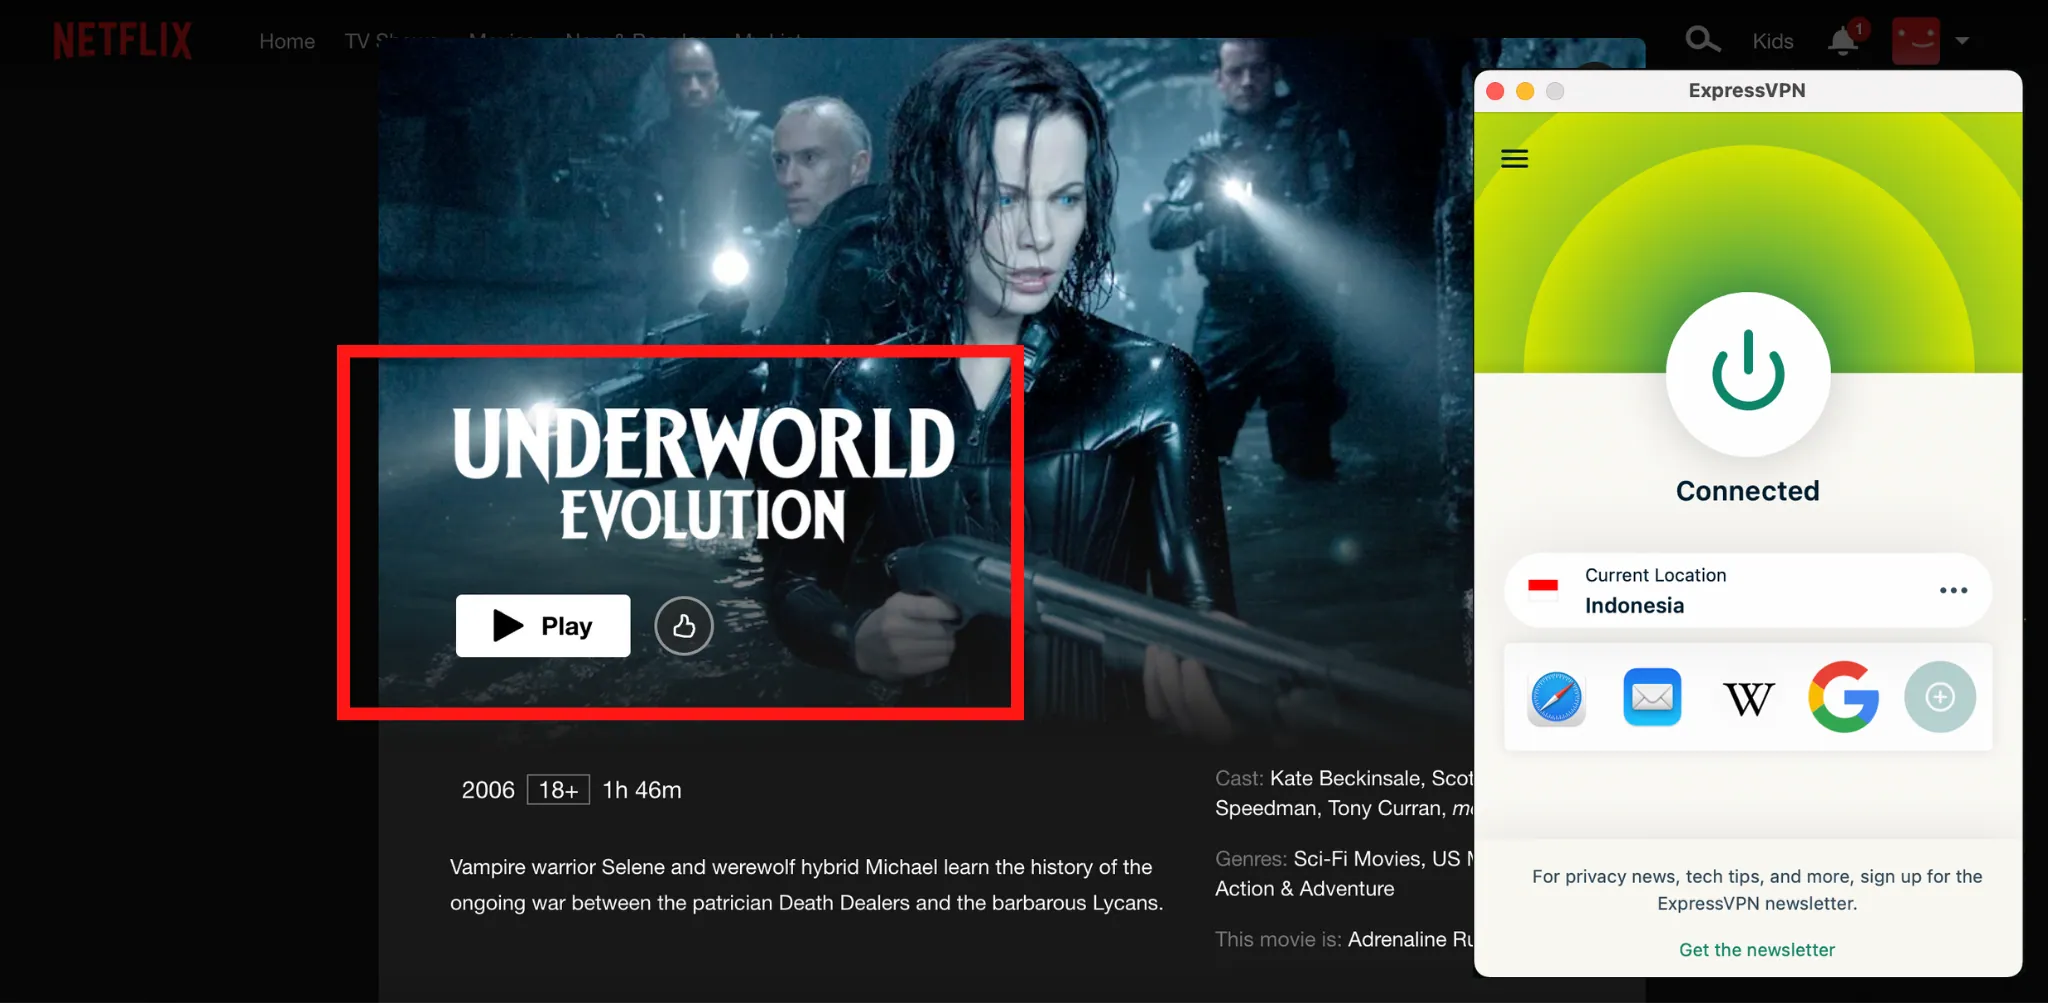 Underworld-ewolucja-Netflix